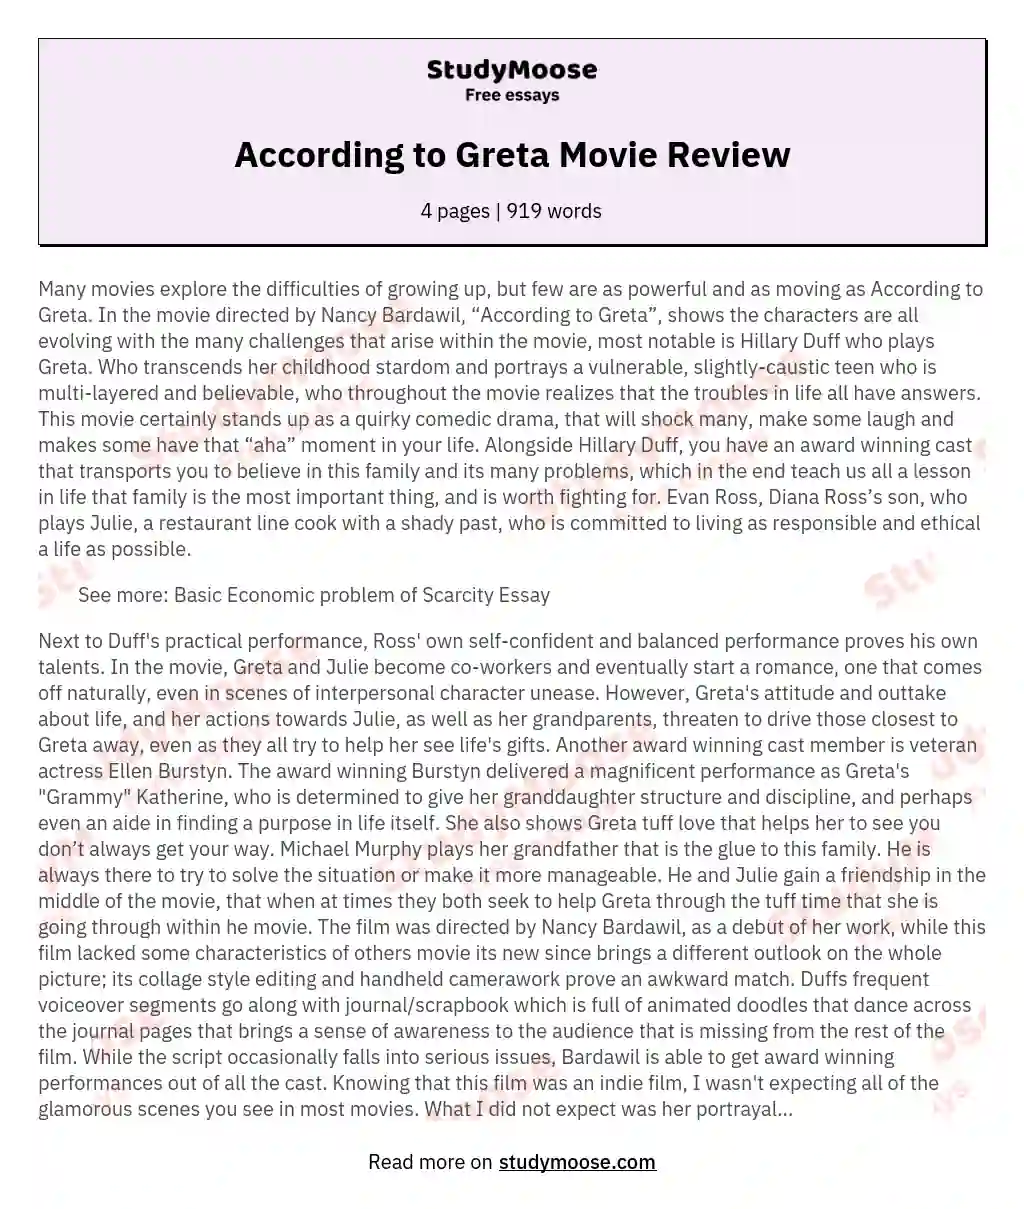 According to Greta Movie Review essay